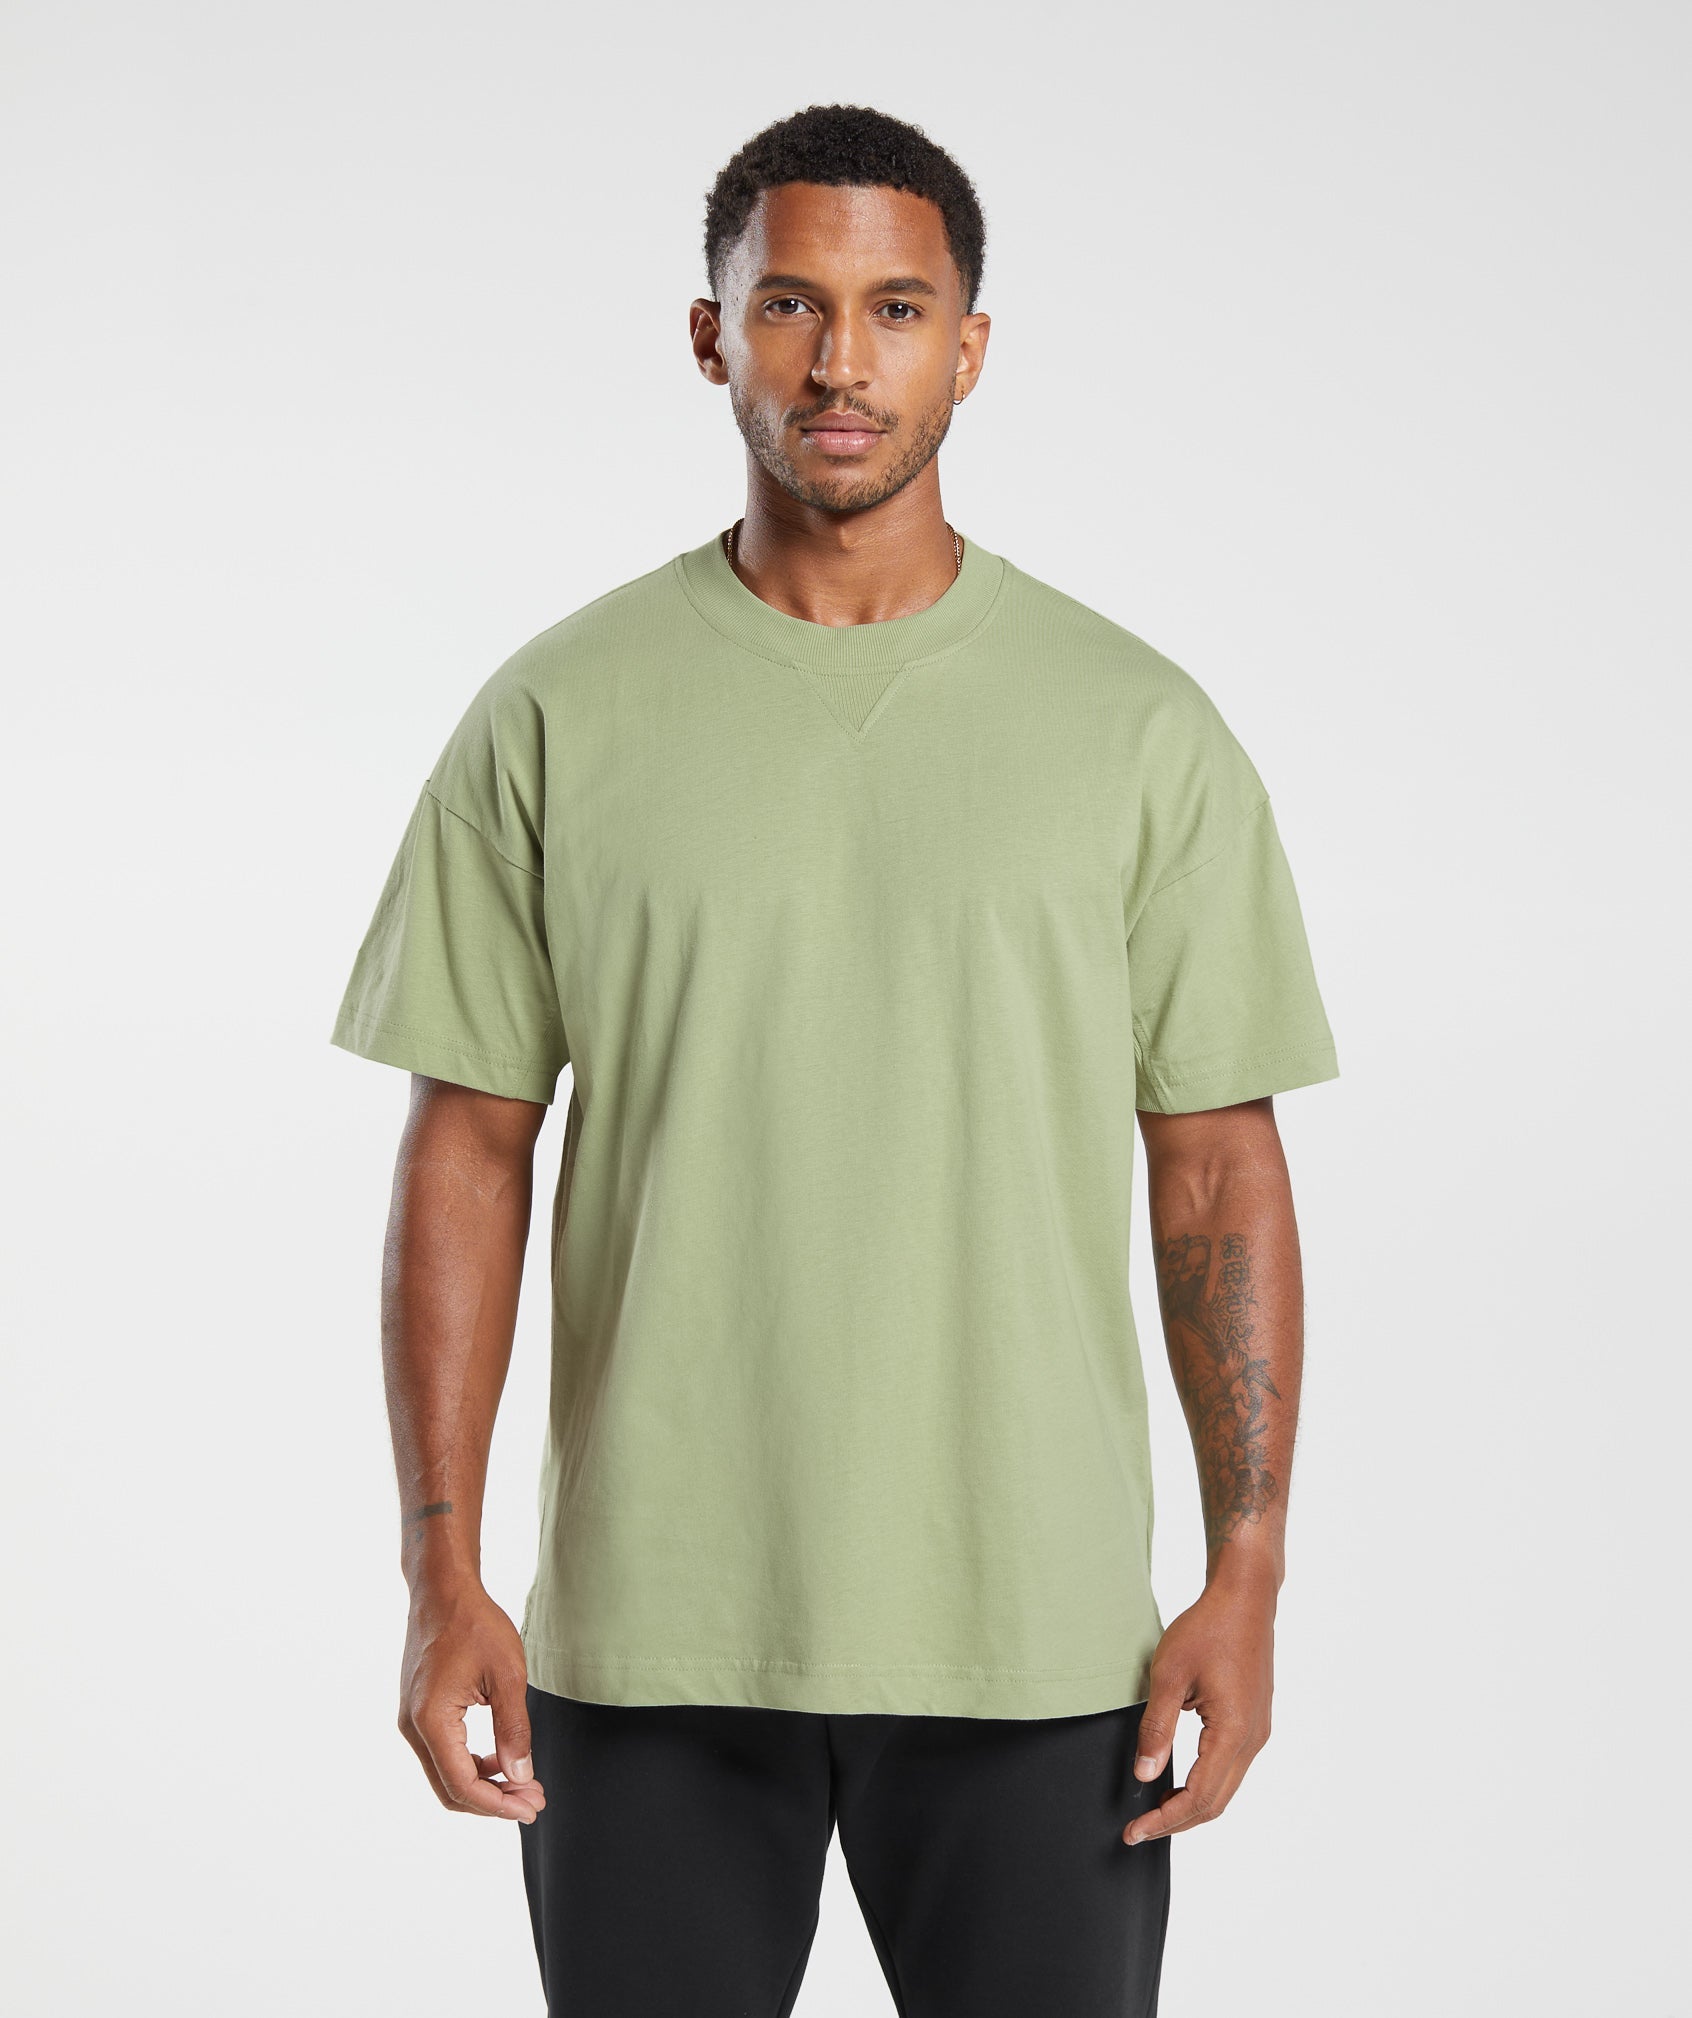 Gymshark Rest Day Essentials T-Shirt - Light Sage Green